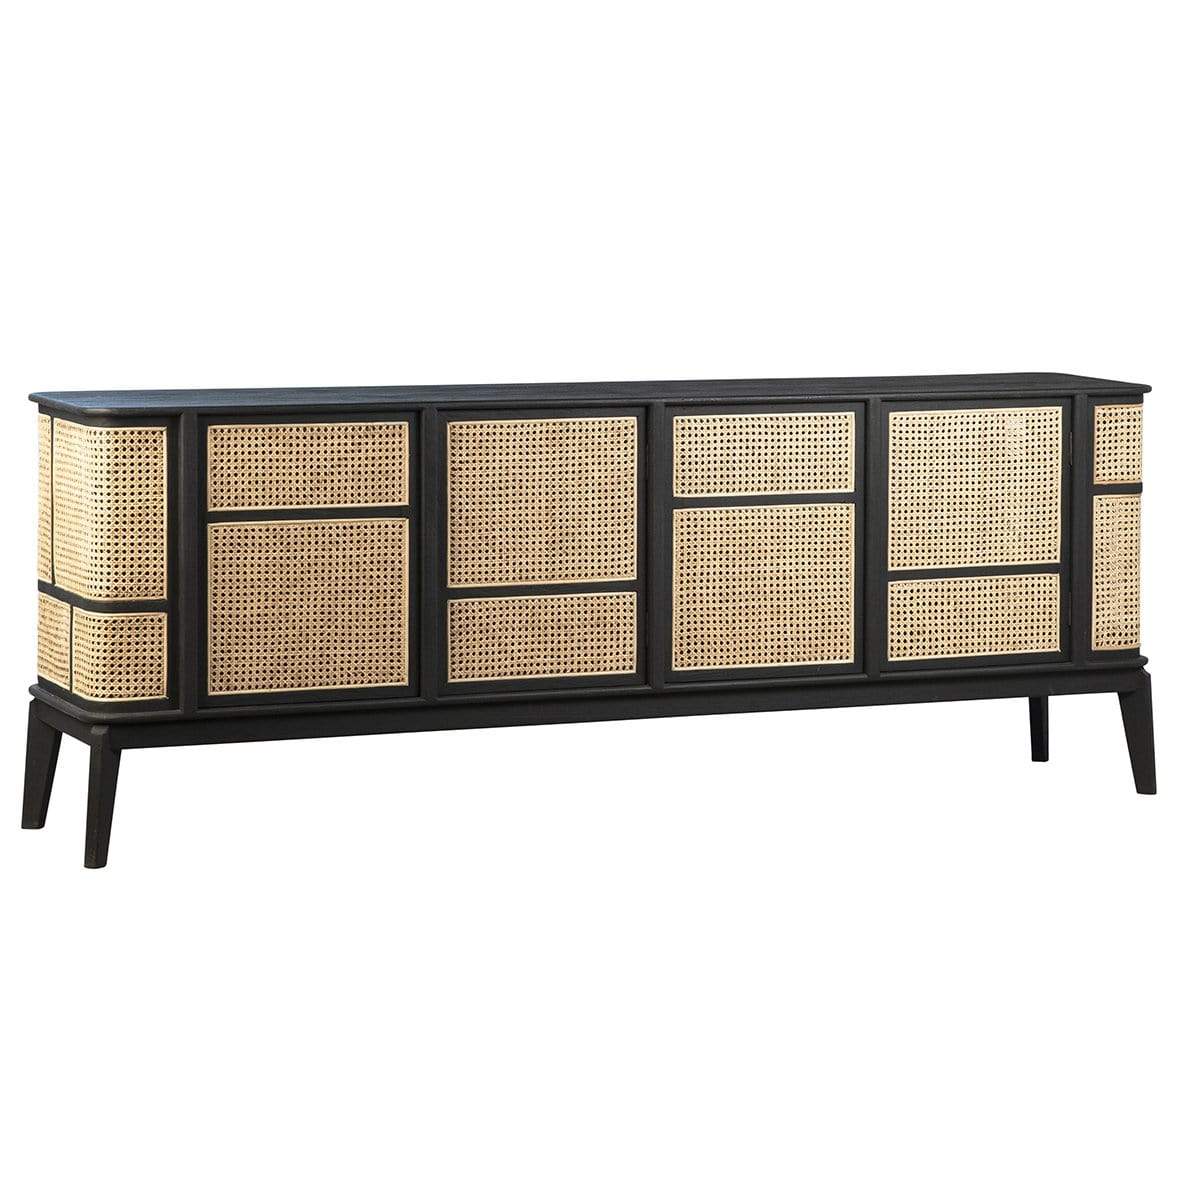 Dovetail Kanton Sideboard Furniture dovetail-DOV6379